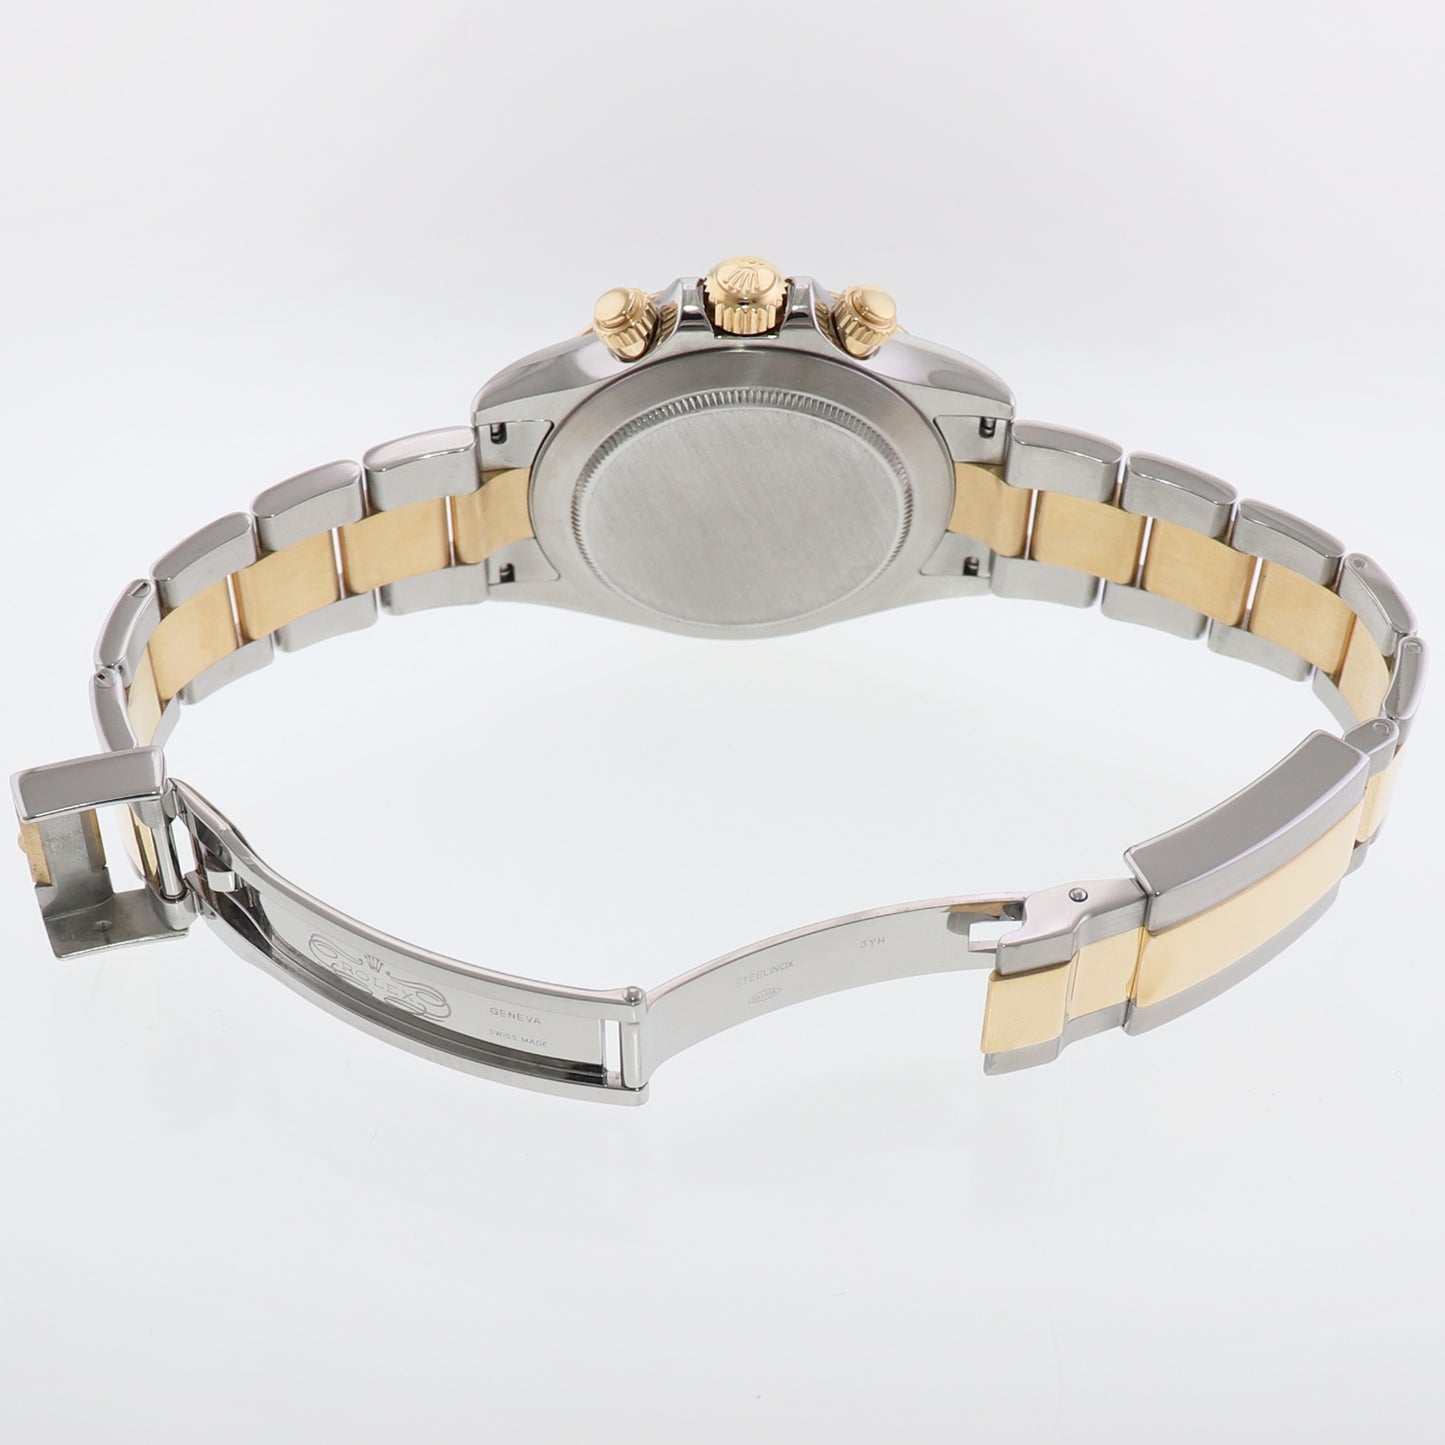 2015 MINT Rolex Daytona 116523 Chronograph Champagne Steel Gold Two Tone Watch